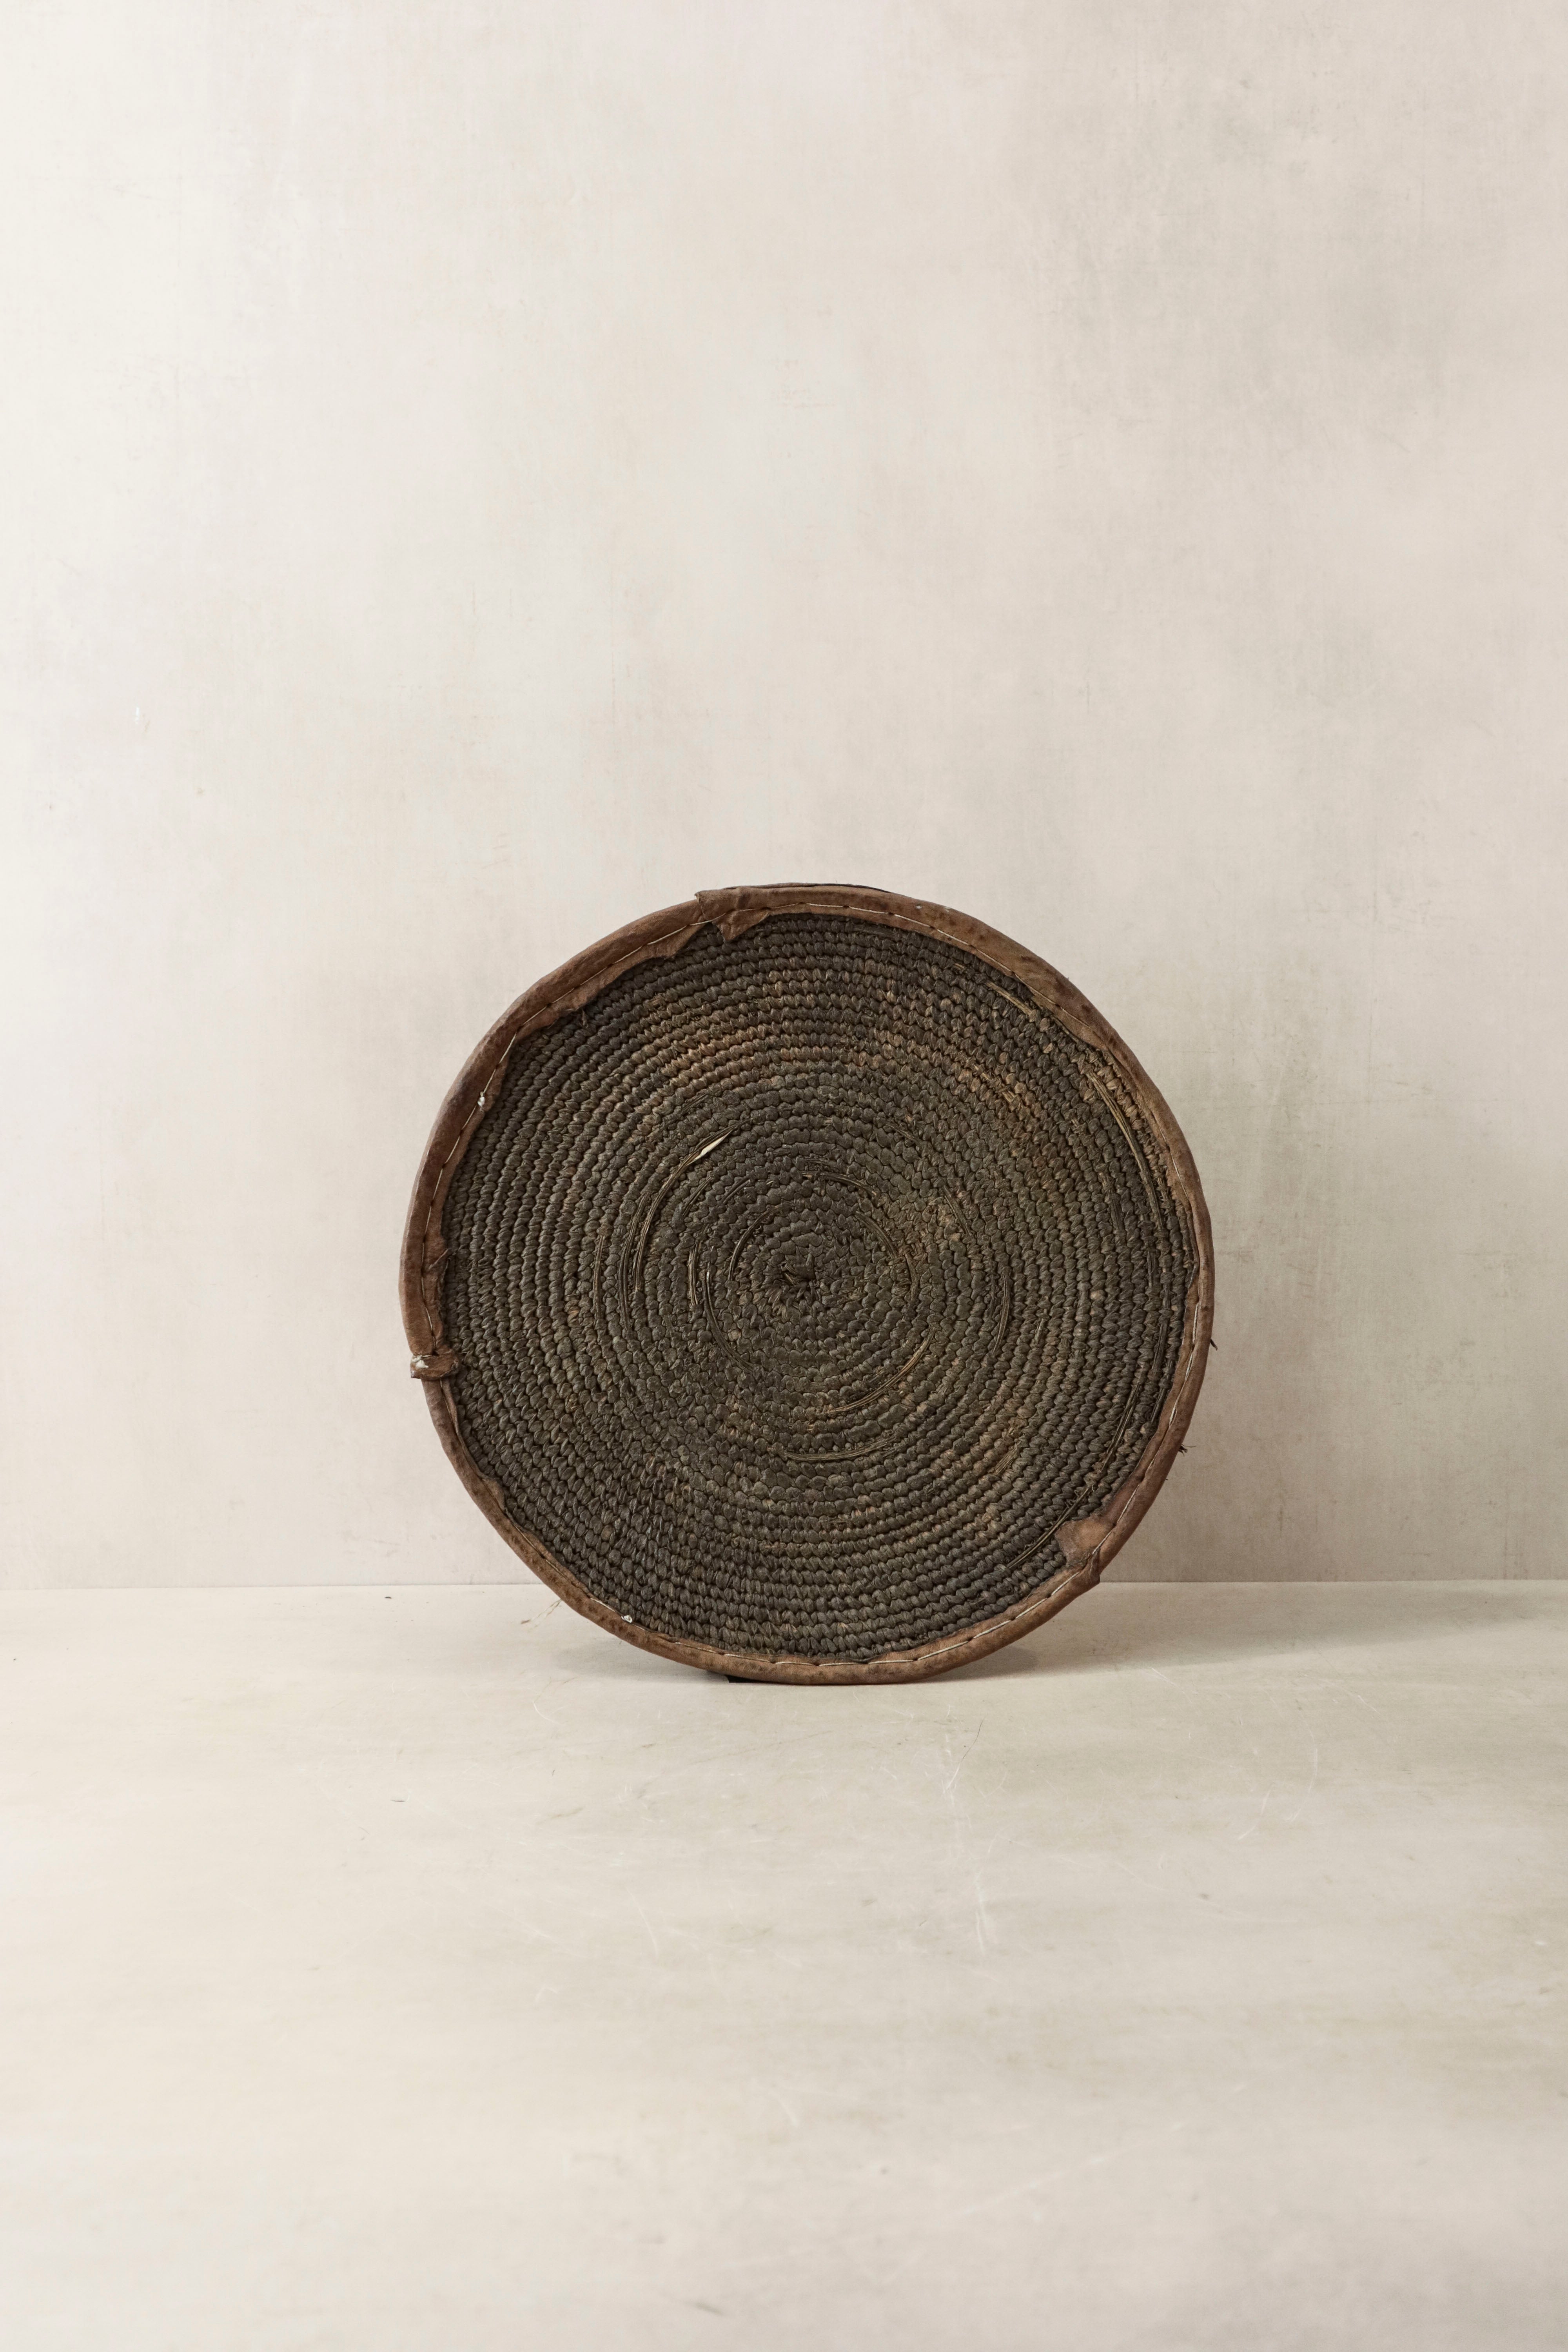 botanicalboysuk Handwoven Wall Basket - Chad - 41.2